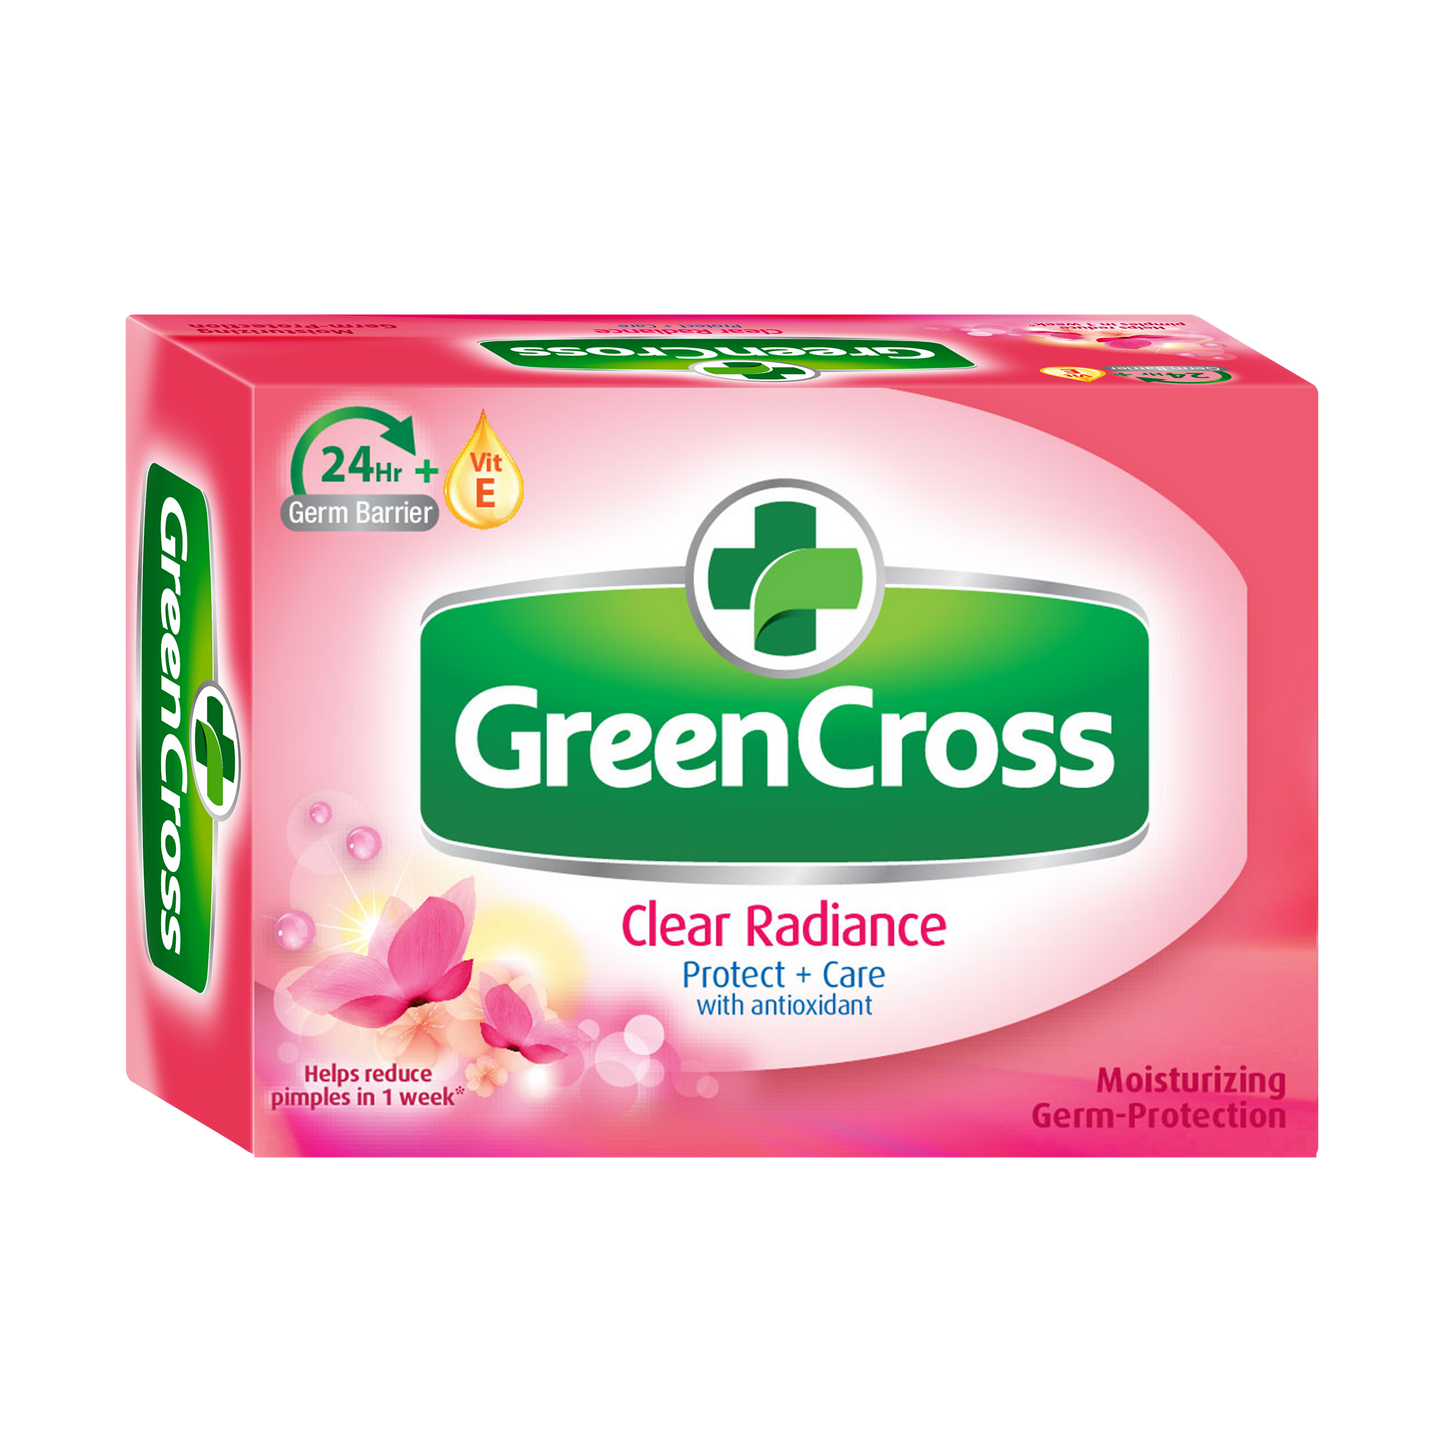 Green Cross Moist Protection Bar Clear Radiance 85g